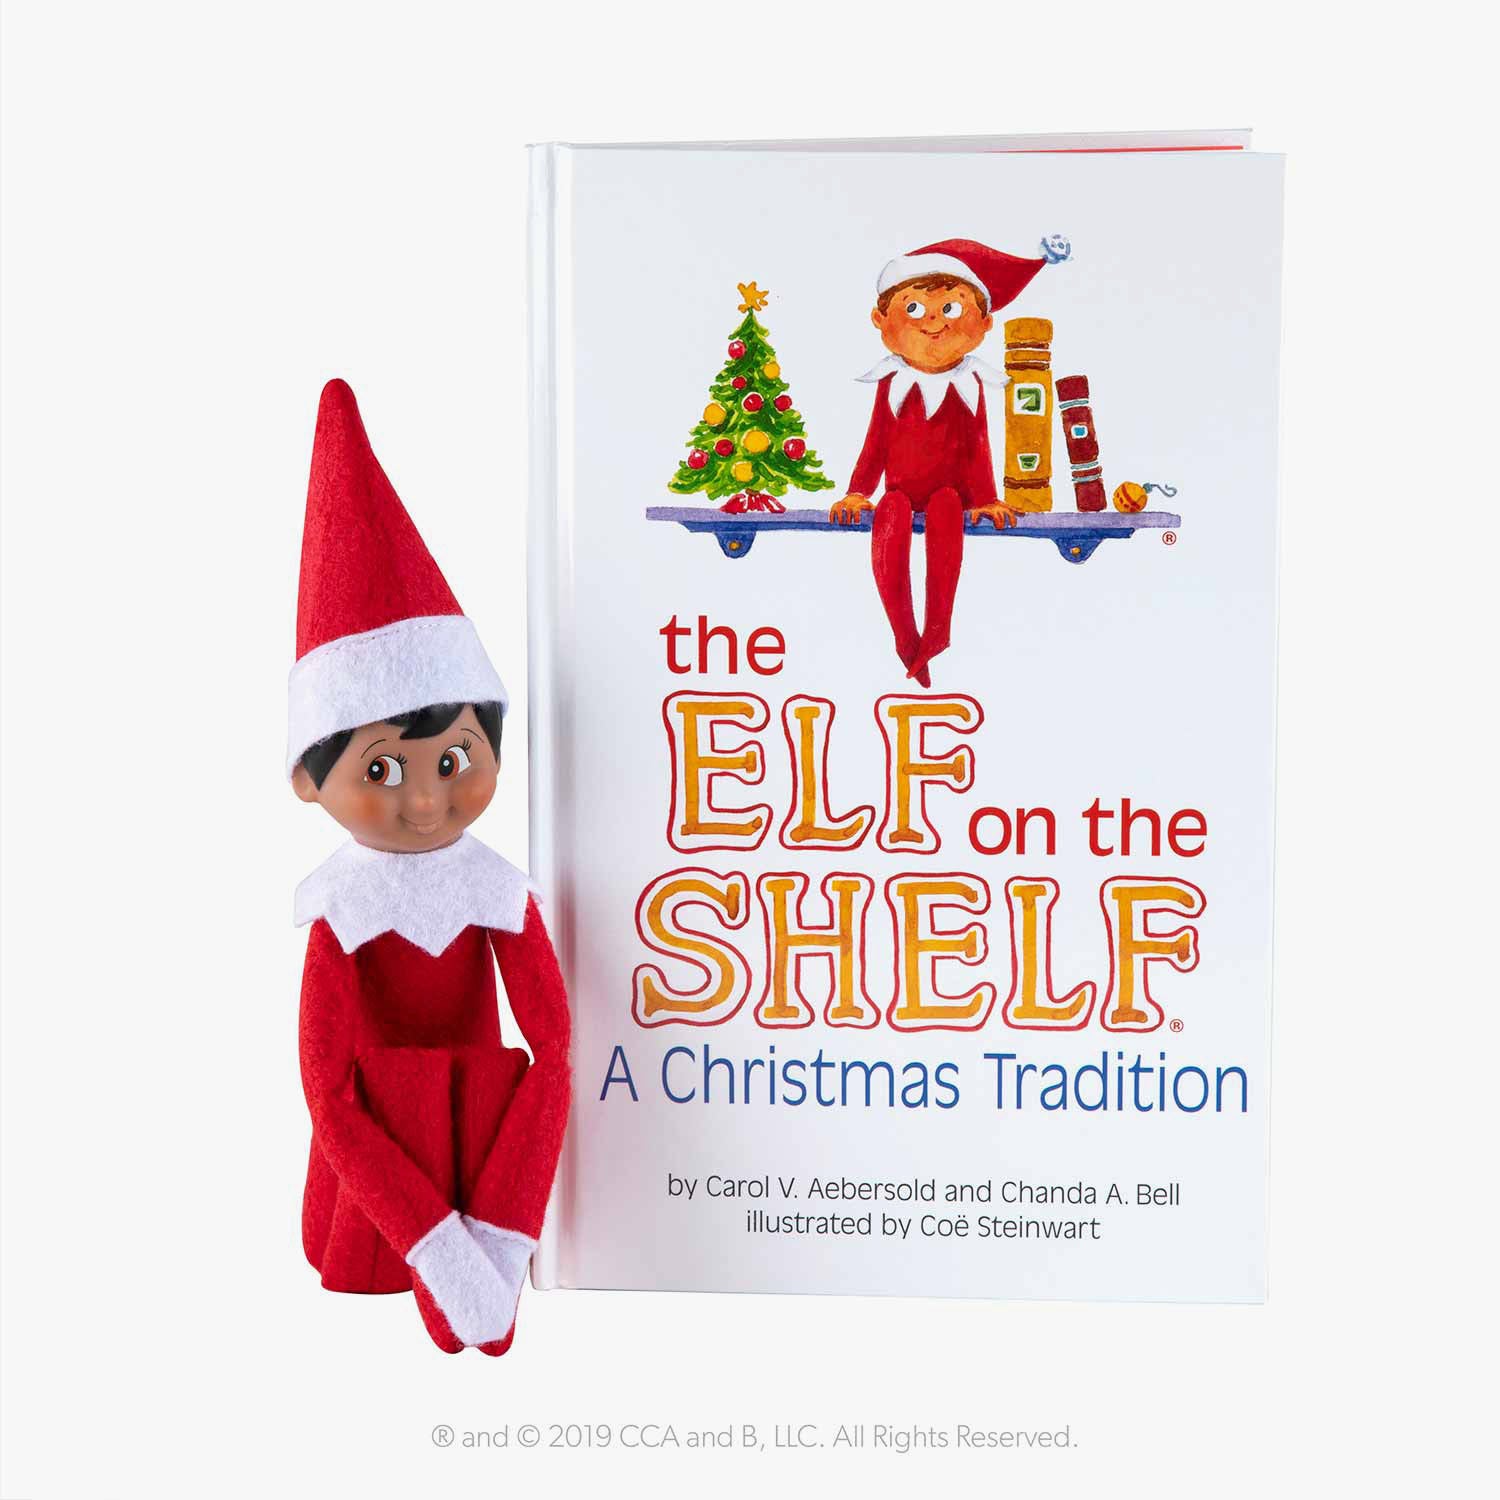 The Elf on the ShelfÆ: A Christmas Tradition Boy, Dark Tone